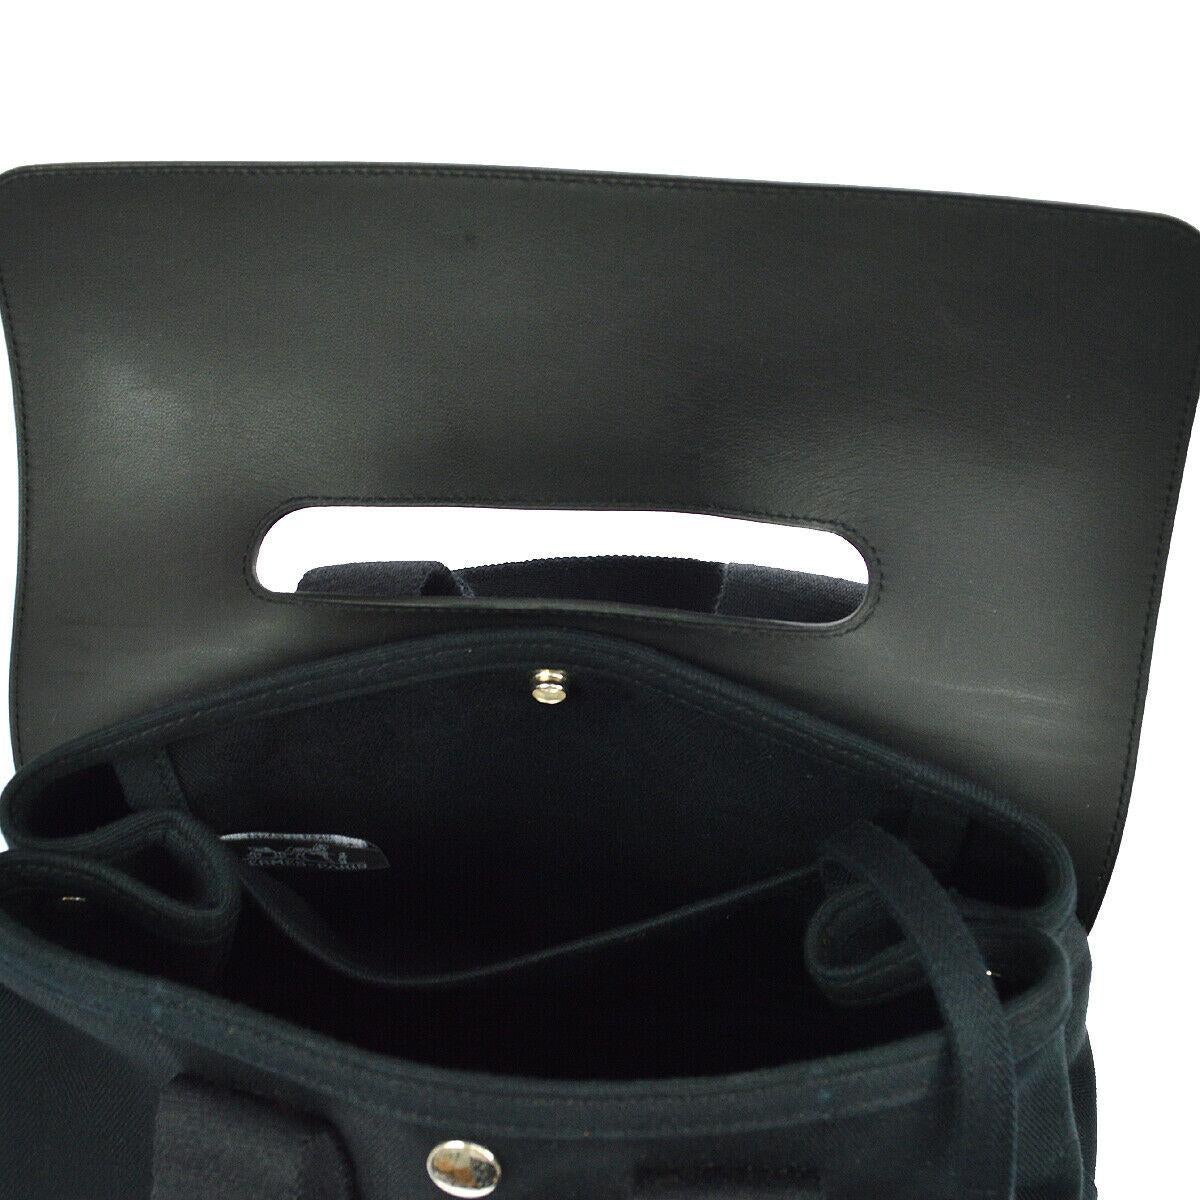 Hermes Black Canvas Leather Trim Top Carryall Handle Satchel Tote Bag in Box 1